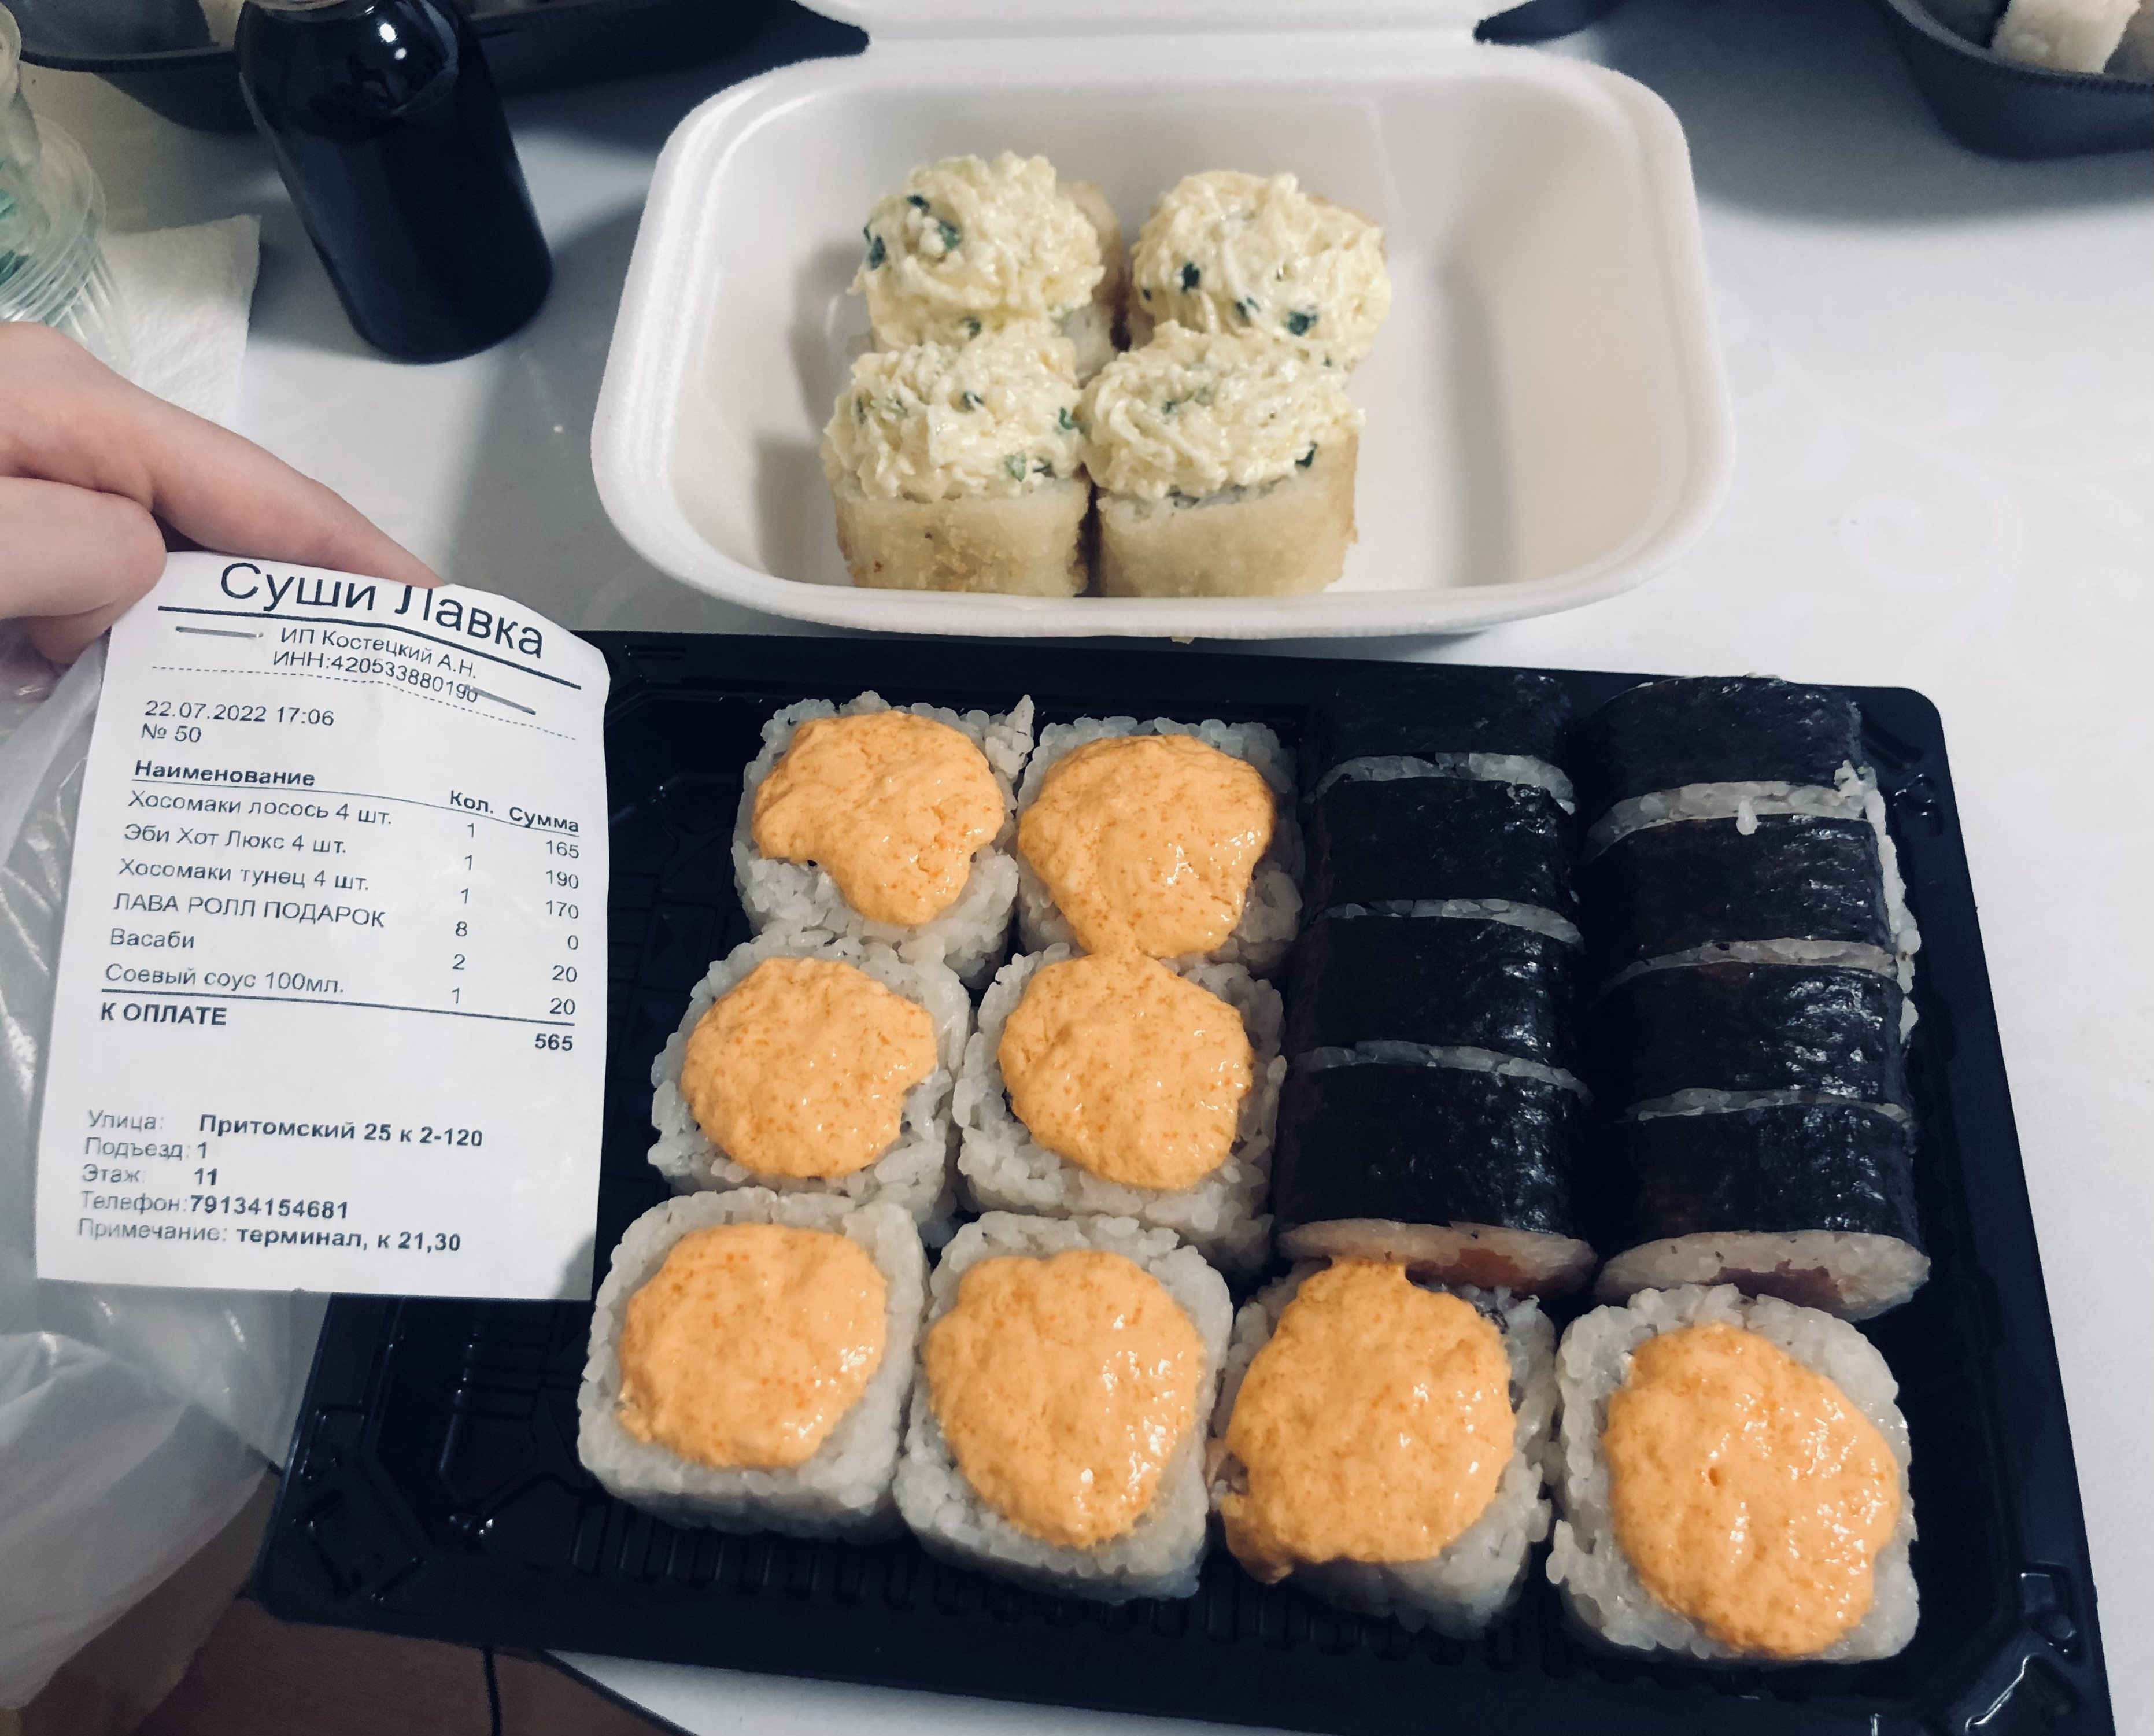 Саппоро суши отзывы фото 70